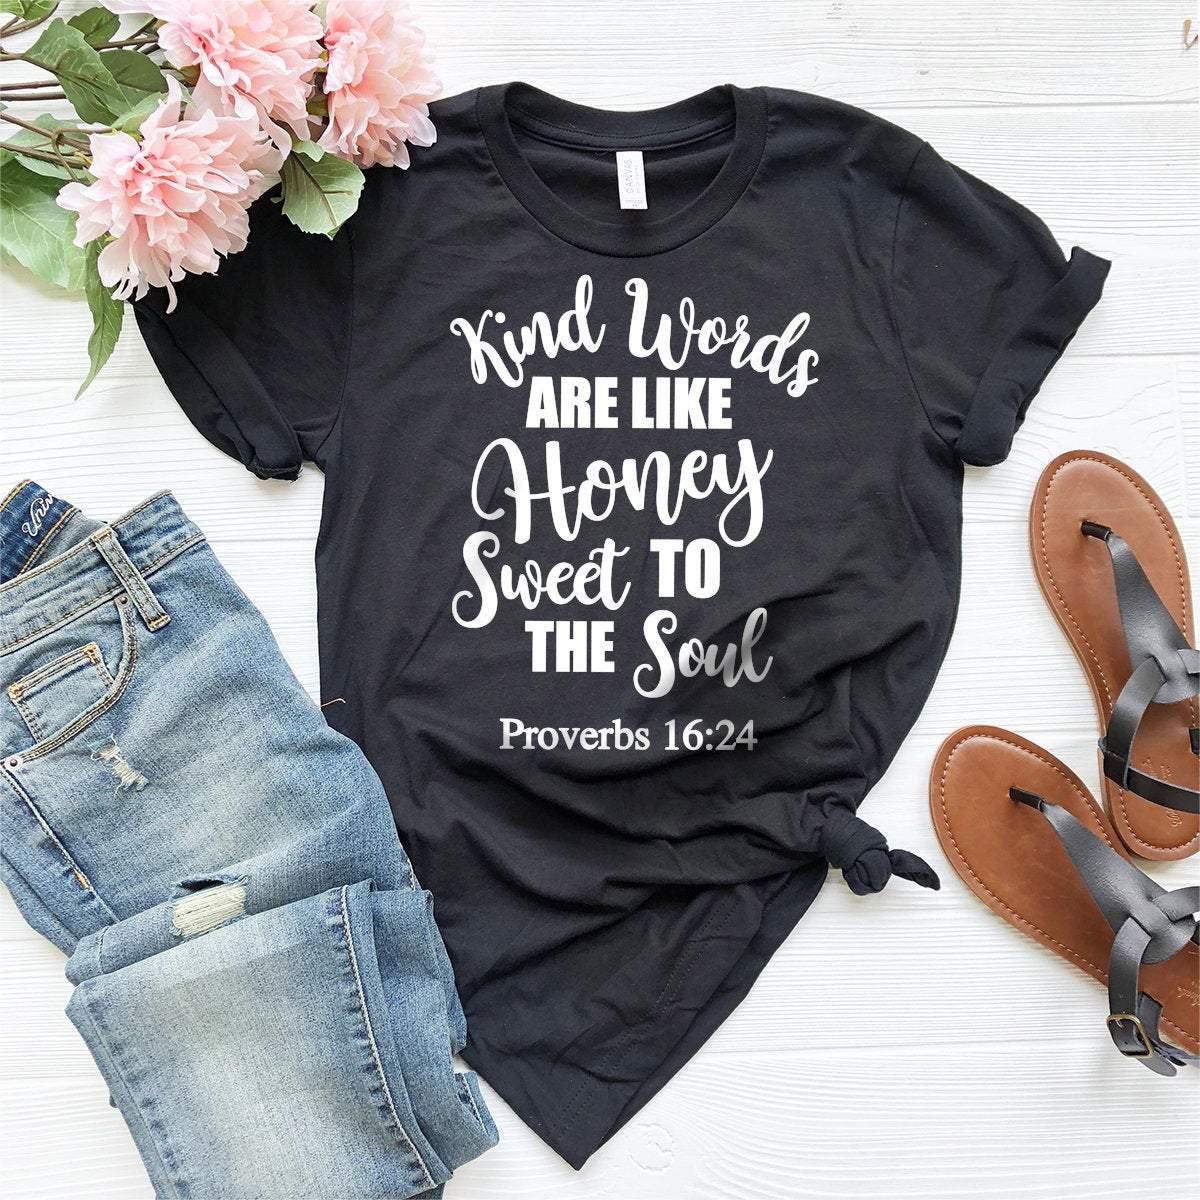 Christian T-Shirt, Bible Verse Shirt, Church Shirt, Faith Shirt, Proverbs 16:24 Shirt, Kind Words Are Like Honey Sweet To The Soul Shirt - Fastdeliverytees.com